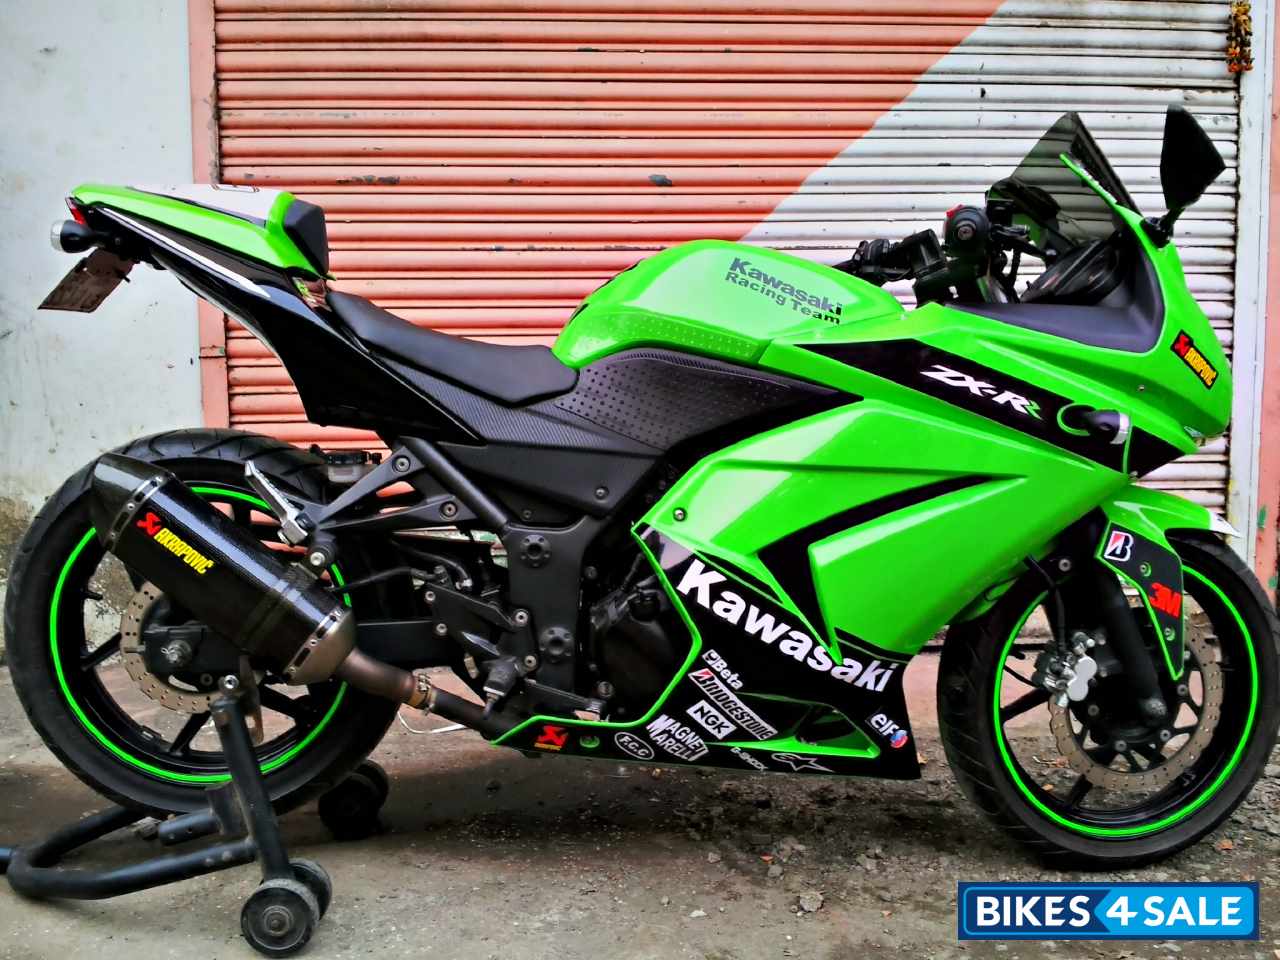 Used 2010 model Kawasaki Ninja 250R for sale in Mumbai. ID 104363. Lime Green colour - Bikes4Sale